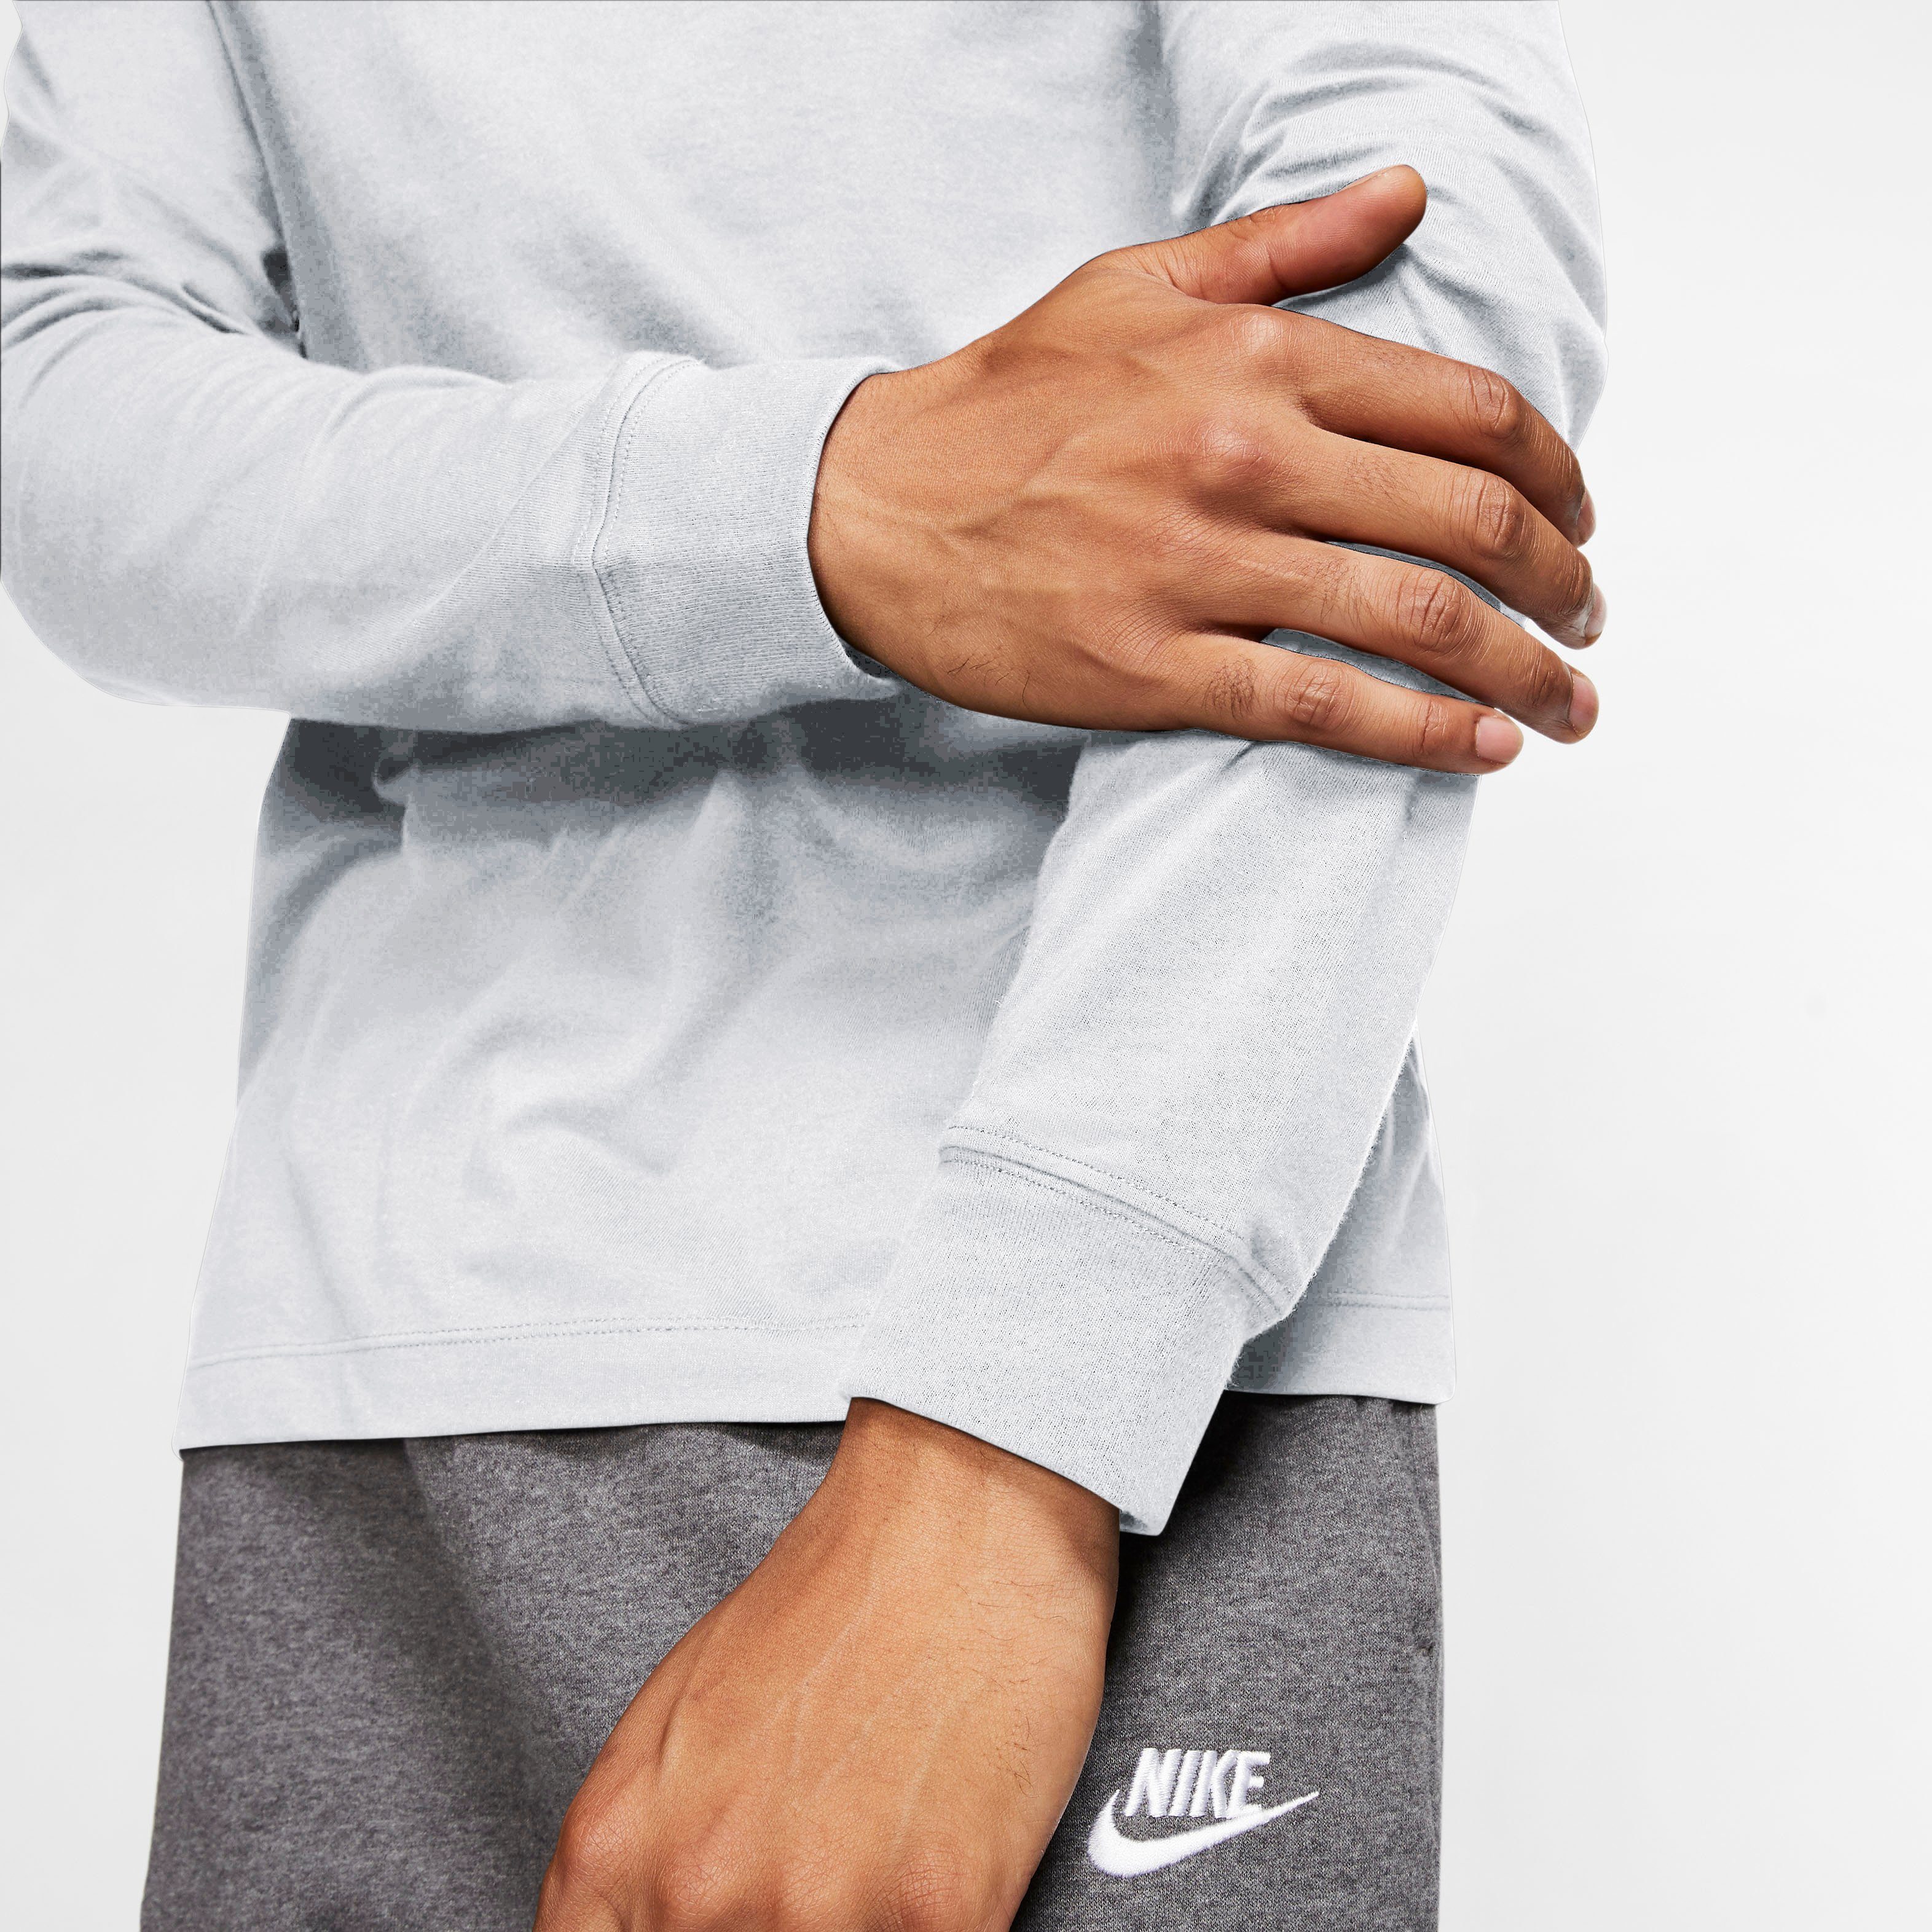 MEN'S LONG-SLEEVE Sportswear Langarmshirt T-SHIRT weiß Nike